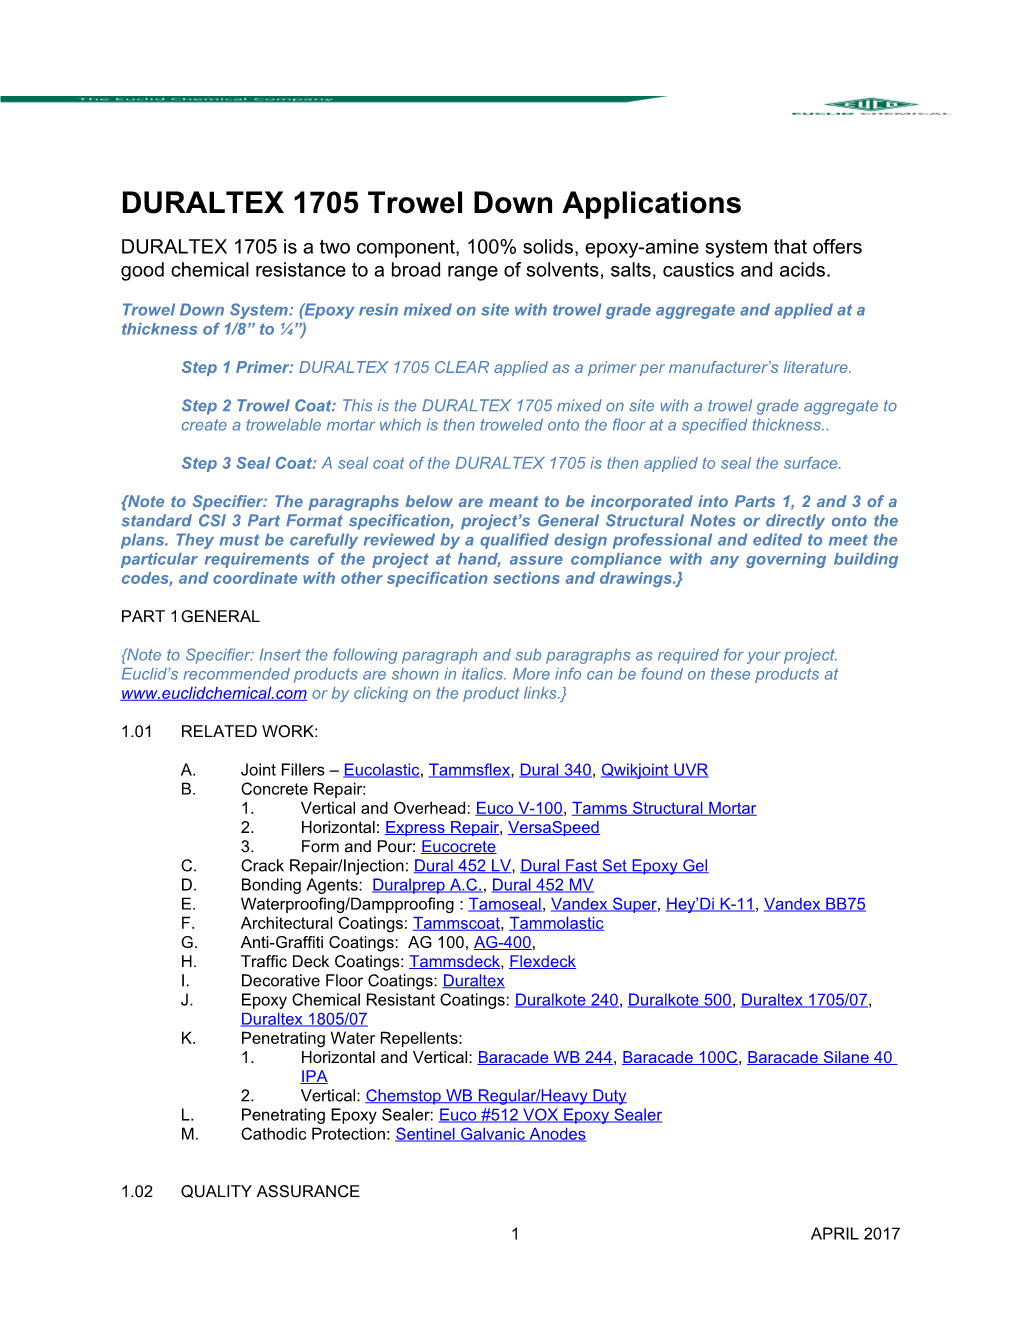 DURALTEX 1705 Trowel Down Applications